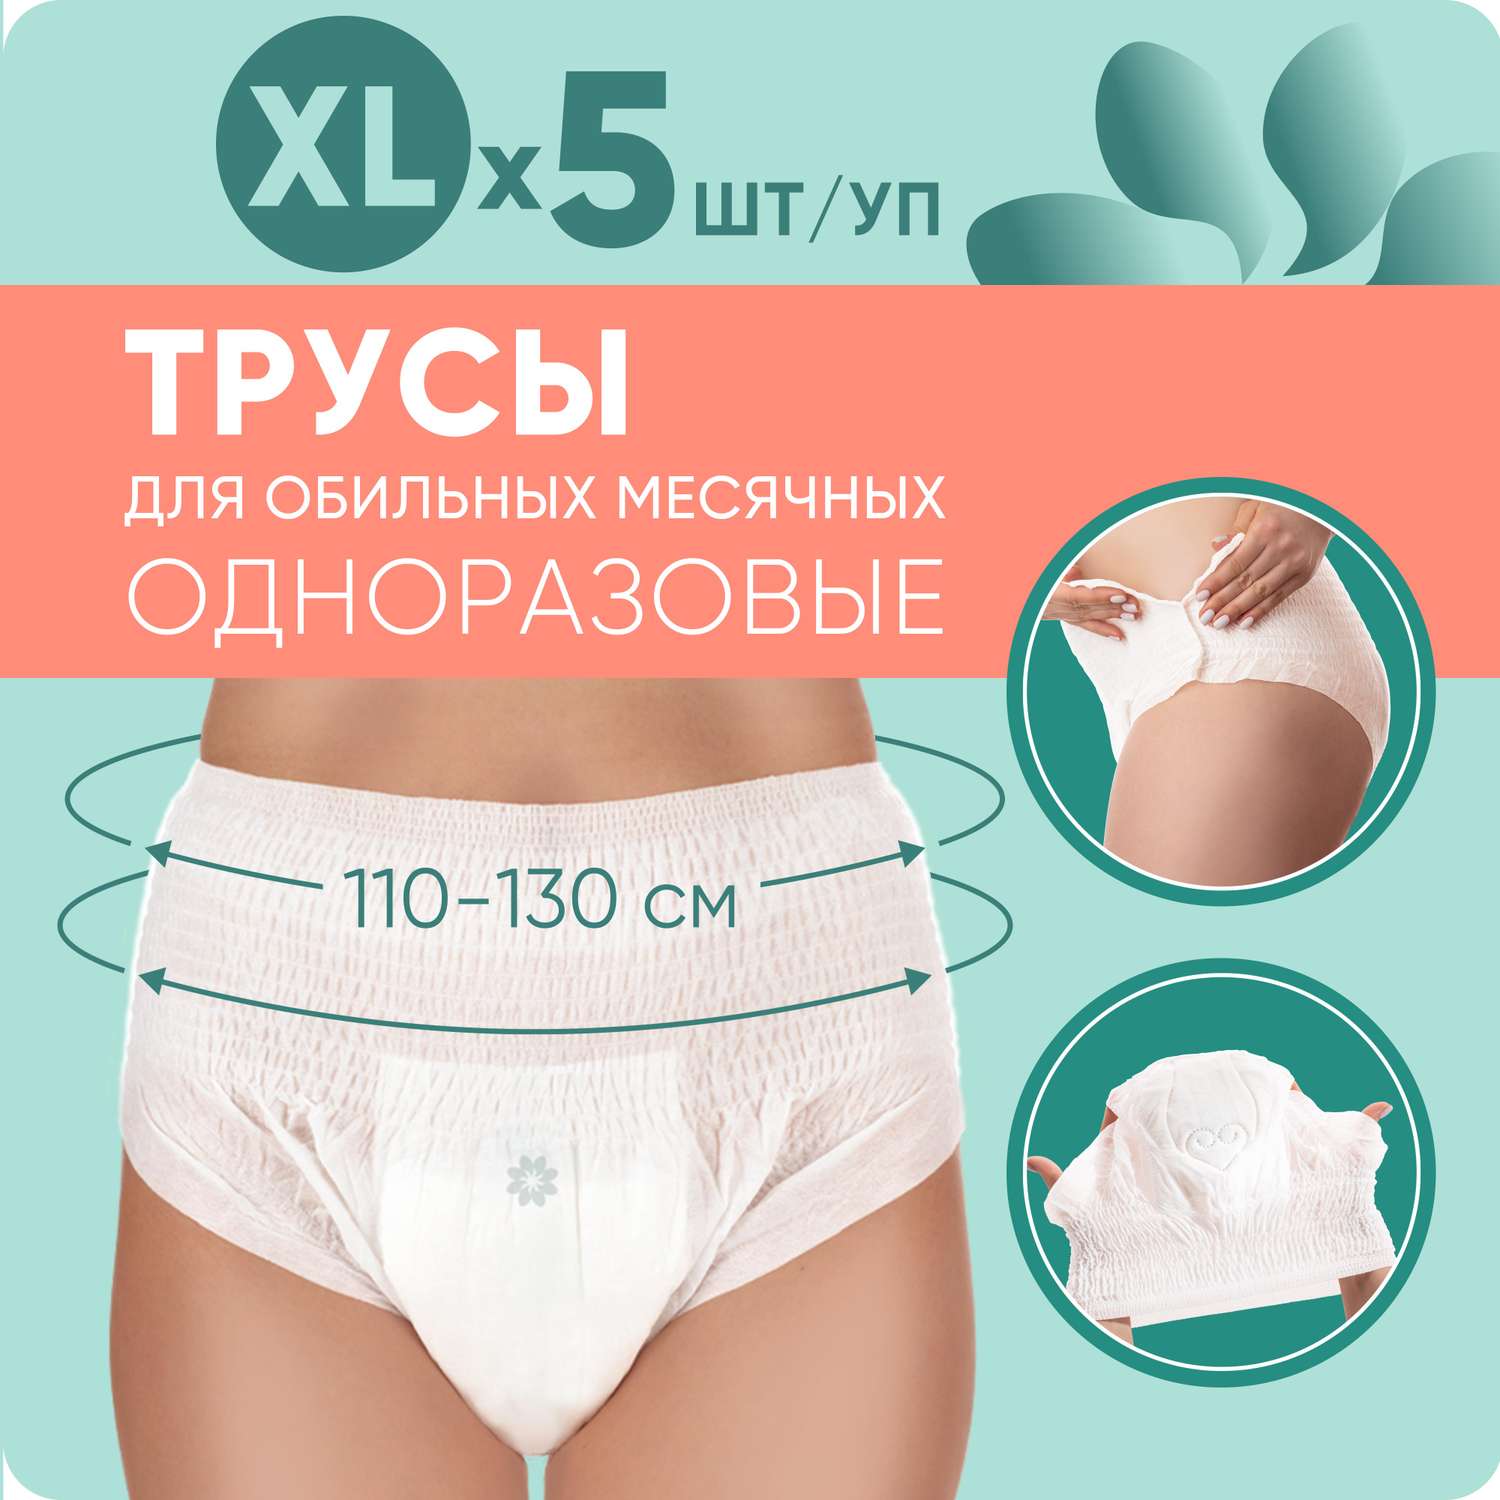 Трусы менструальные E-RASY одноразовые Размер XL 5 шт. - фото 1